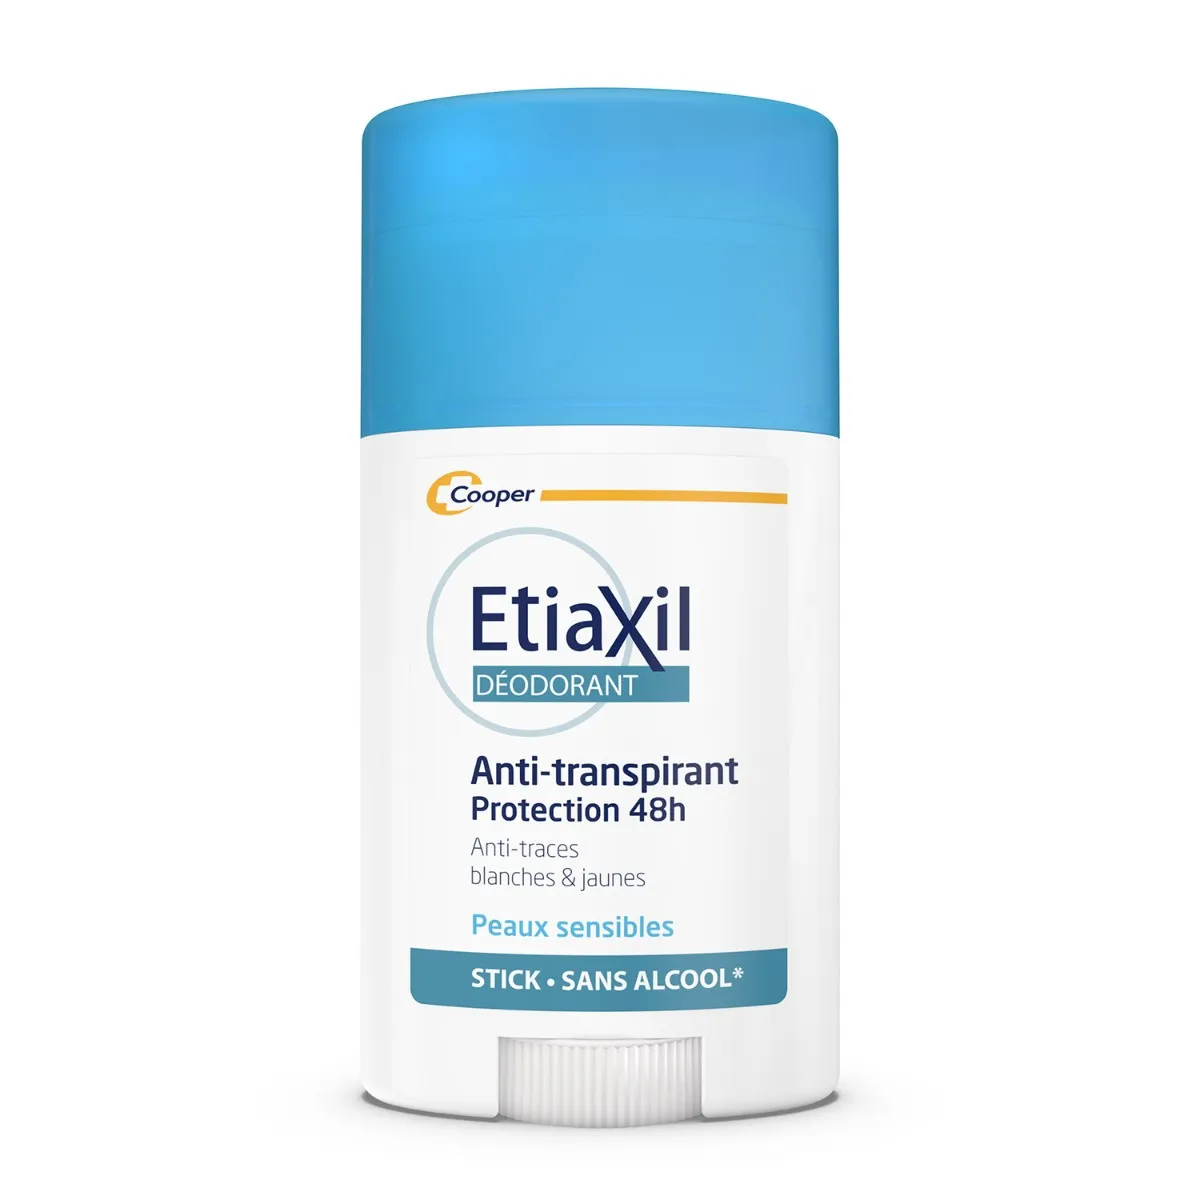 3614819997436-etiaxil-deodorant-stick-anti-transpirant-48h-40ml